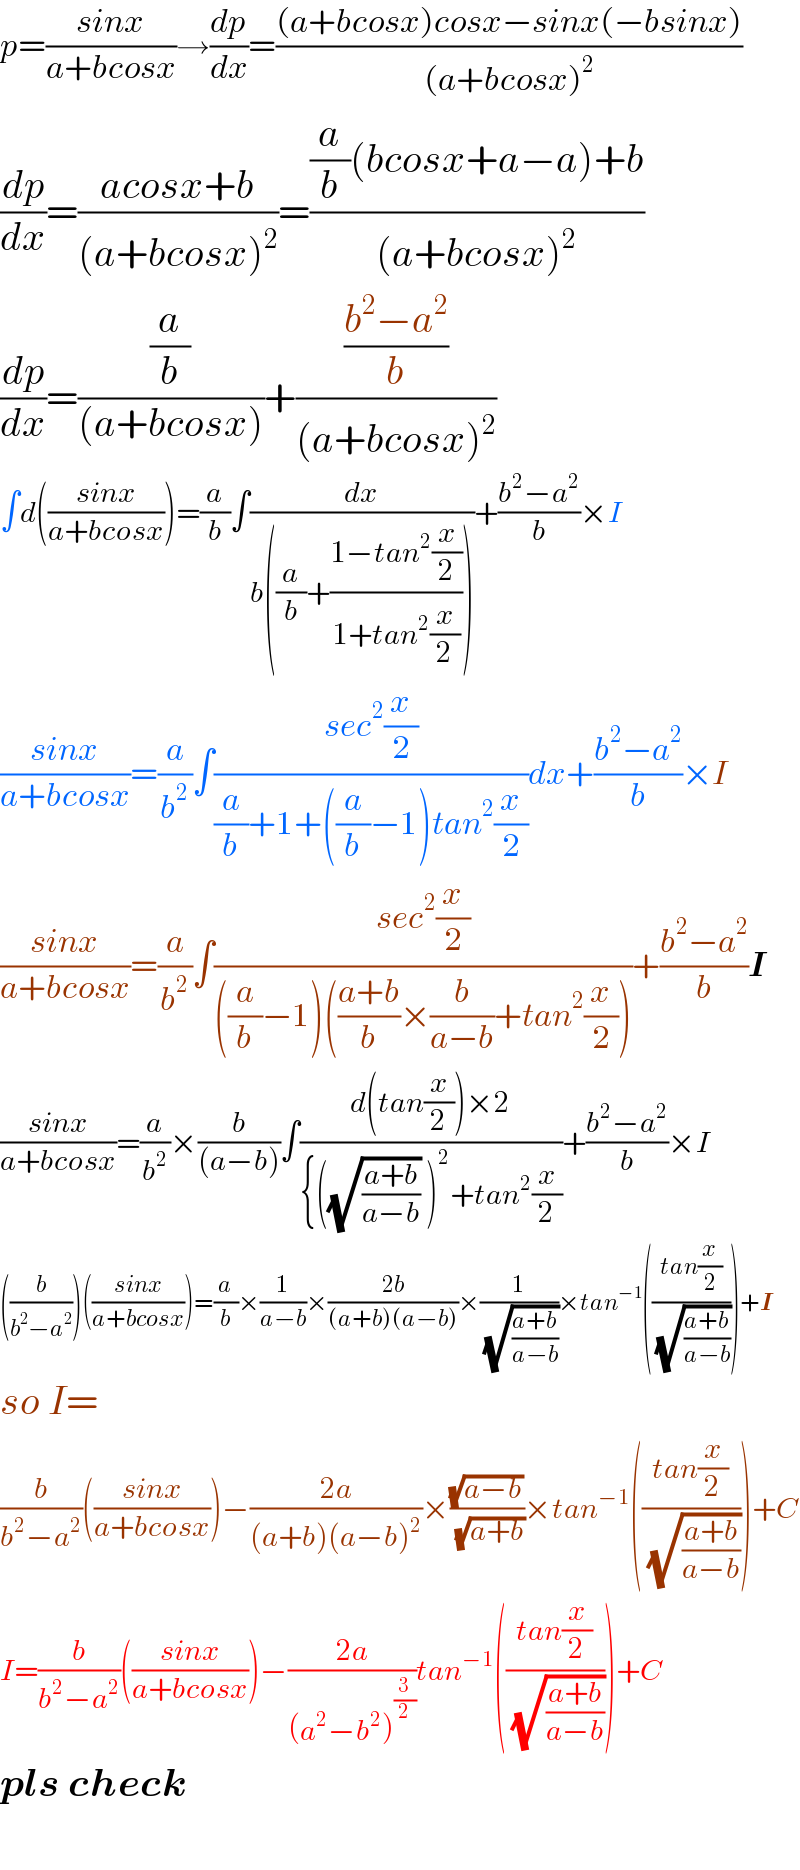 p=((sinx)/(a+bcosx))→(dp/dx)=(((a+bcosx)cosx−sinx(−bsinx))/((a+bcosx)^2 ))  (dp/dx)=((acosx+b)/((a+bcosx)^2 ))=(((a/b)(bcosx+a−a)+b)/((a+bcosx)^2 ))  (dp/dx)=((a/b)/((a+bcosx)))+(((b^2 −a^2 )/b)/((a+bcosx)^2 ))  ∫d(((sinx)/(a+bcosx)))=(a/b)∫(dx/(b((a/b)+((1−tan^2 (x/2))/(1+tan^2 (x/2))))))+((b^2 −a^2 )/b)×I  ((sinx)/(a+bcosx))=(a/b^2 )∫((sec^2 (x/2))/((a/b)+1+((a/b)−1)tan^2 (x/2)))dx+((b^2 −a^2 )/b)×I  ((sinx)/(a+bcosx))=(a/b^2 )∫((sec^2 (x/2))/(((a/b)−1)(((a+b)/b)×(b/(a−b))+tan^2 (x/2))))+((b^2 −a^2 )/b)I  ((sinx)/(a+bcosx))=(a/b^2 )×(b/((a−b)))∫((d(tan(x/2))×2)/({((√((a+b)/(a−b))) )^2 +tan^2 (x/2)))+((b^2 −a^2 )/b)×I  ((b/(b^2 −a^2 )))(((sinx)/(a+bcosx)))=(a/b)×(1/(a−b))×((2b)/((a+b)(a−b)))×(1/( (√((a+b)/(a−b)))))×tan^(−1) (((tan(x/2))/( (√((a+b)/(a−b))))))+I  so I=  (b/(b^2 −a^2 ))(((sinx)/(a+bcosx)))−((2a)/((a+b)(a−b)^2 ))×((√(a−b))/( (√(a+b))))×tan^(−1) (((tan(x/2))/( (√((a+b)/(a−b))))))+C  I=(b/(b^2 −a^2 ))(((sinx)/(a+bcosx)))−((2a)/((a^2 −b^2 )^(3/2) ))tan^(−1) (((tan(x/2))/( (√((a+b)/(a−b))))))+C  pls check    